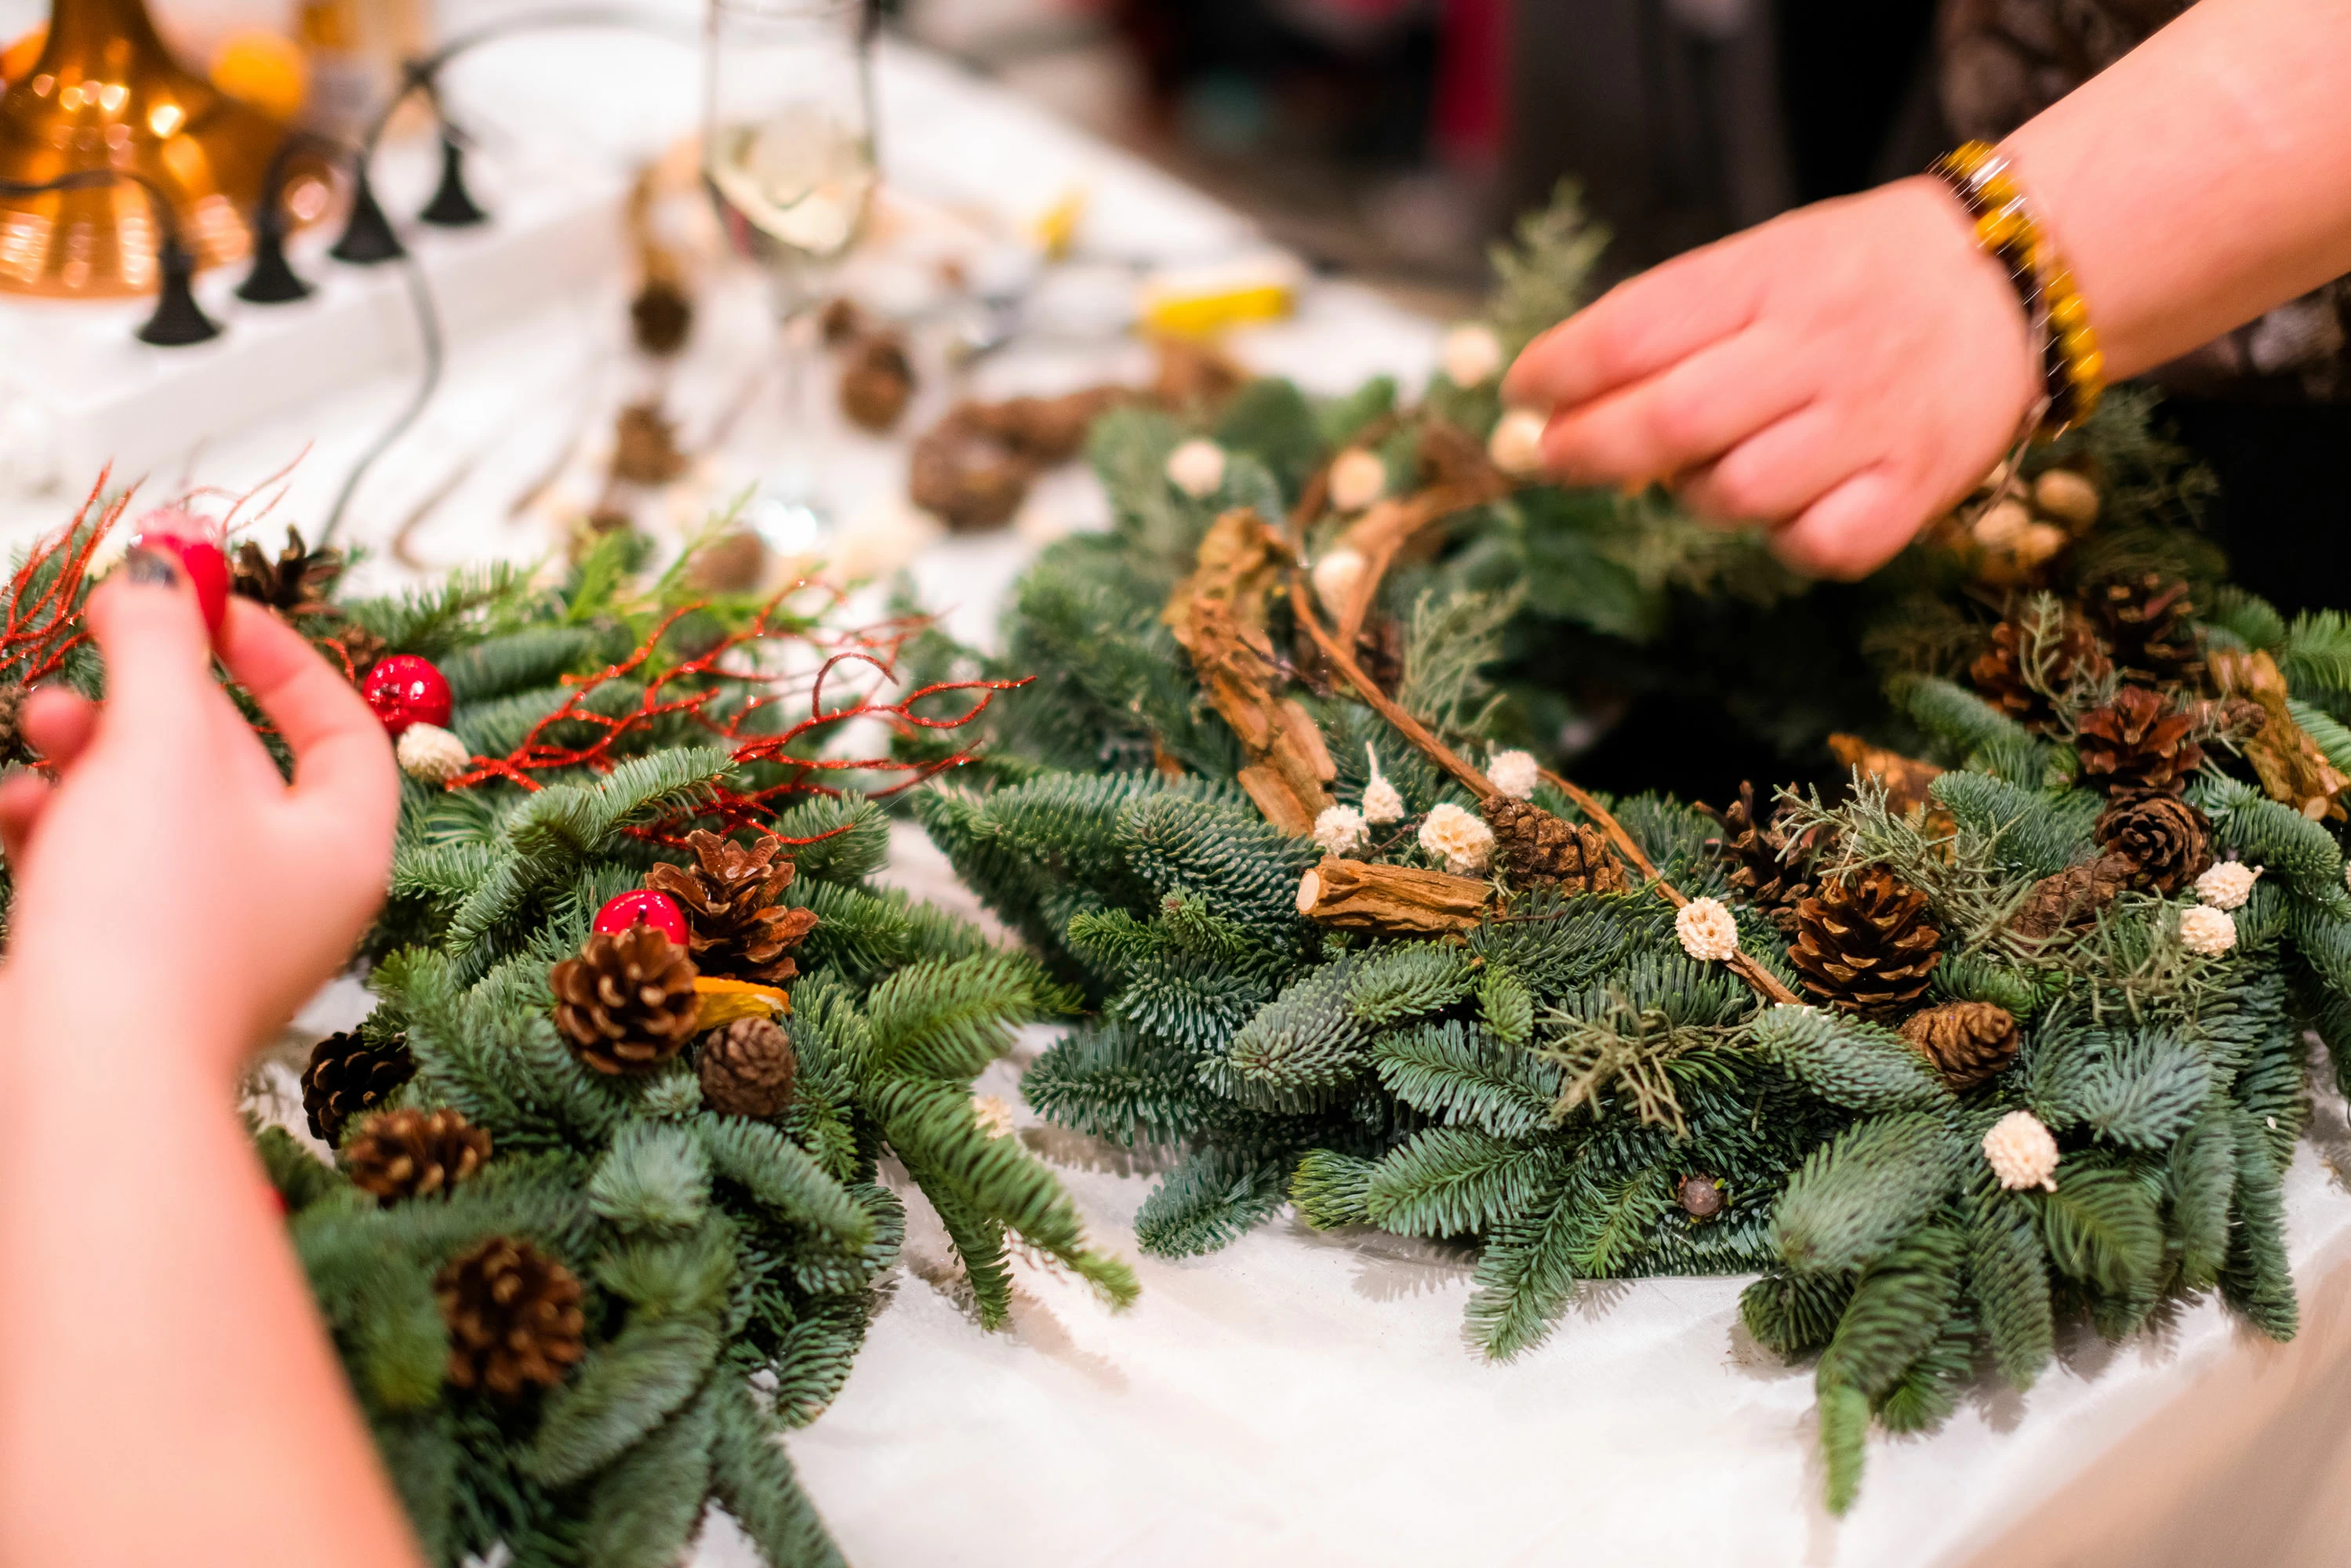 Preparing Your Christmas Wreaths!